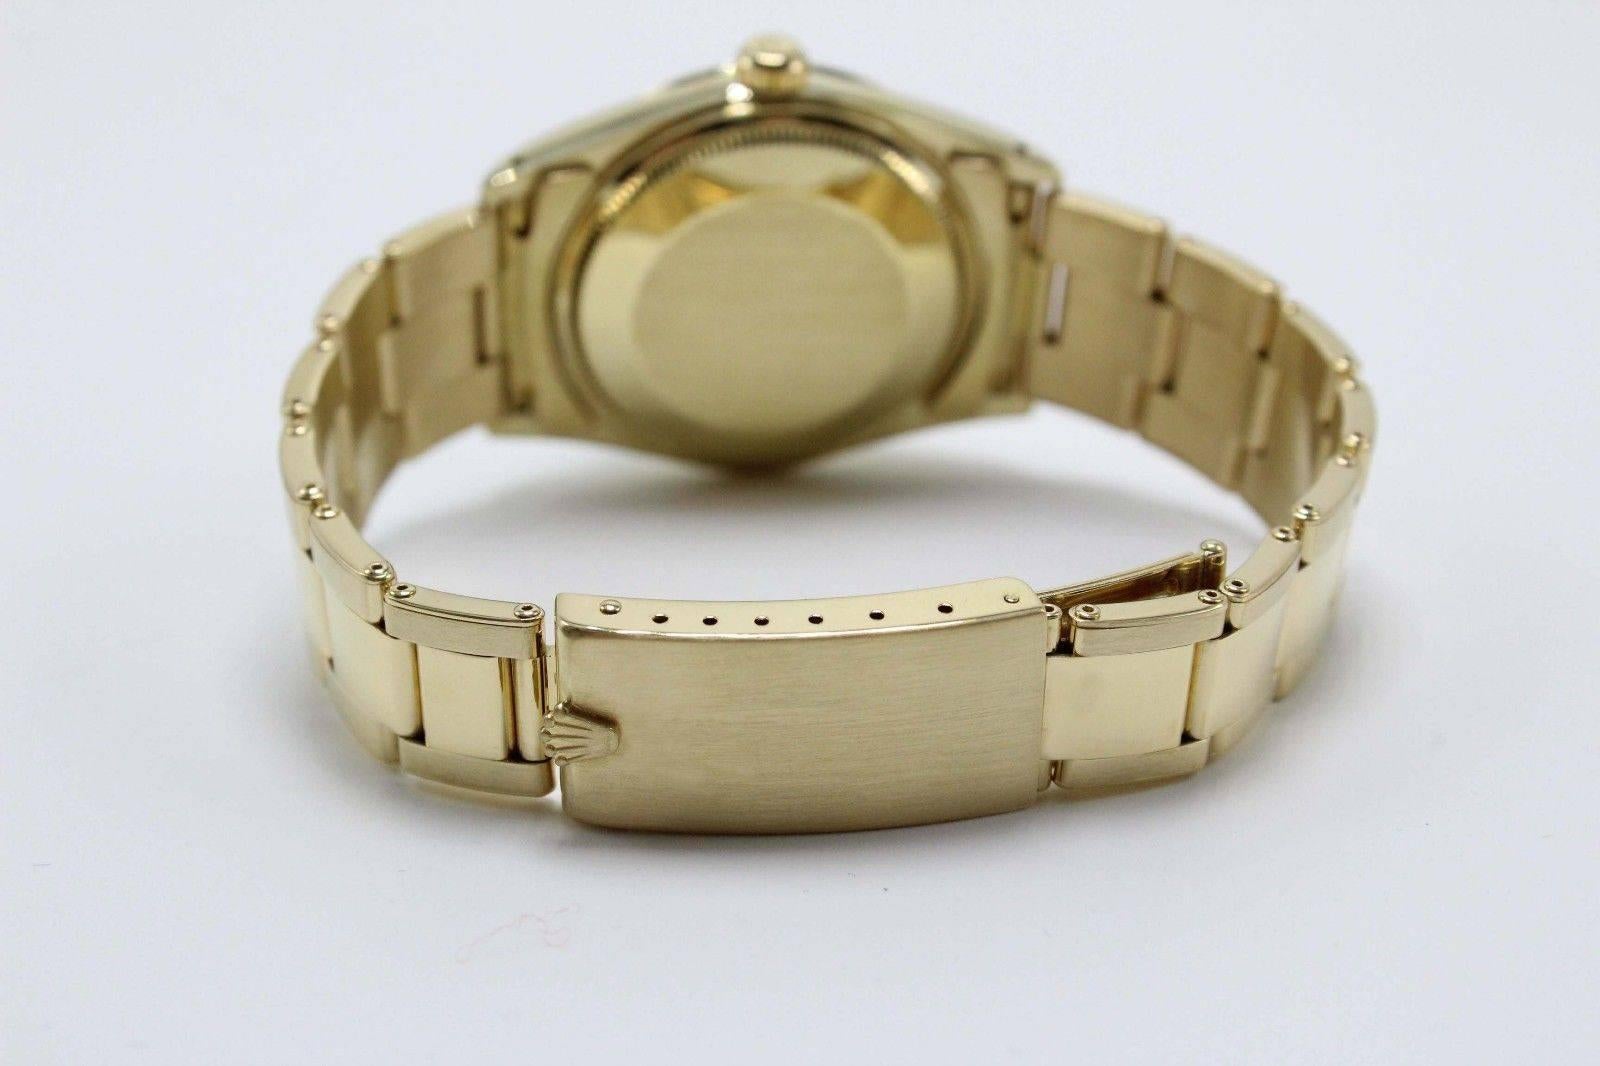 Rolex 15007 Date Watch 18 Karat Yellow Gold and 14 Karat Yellow Gold Watch 2